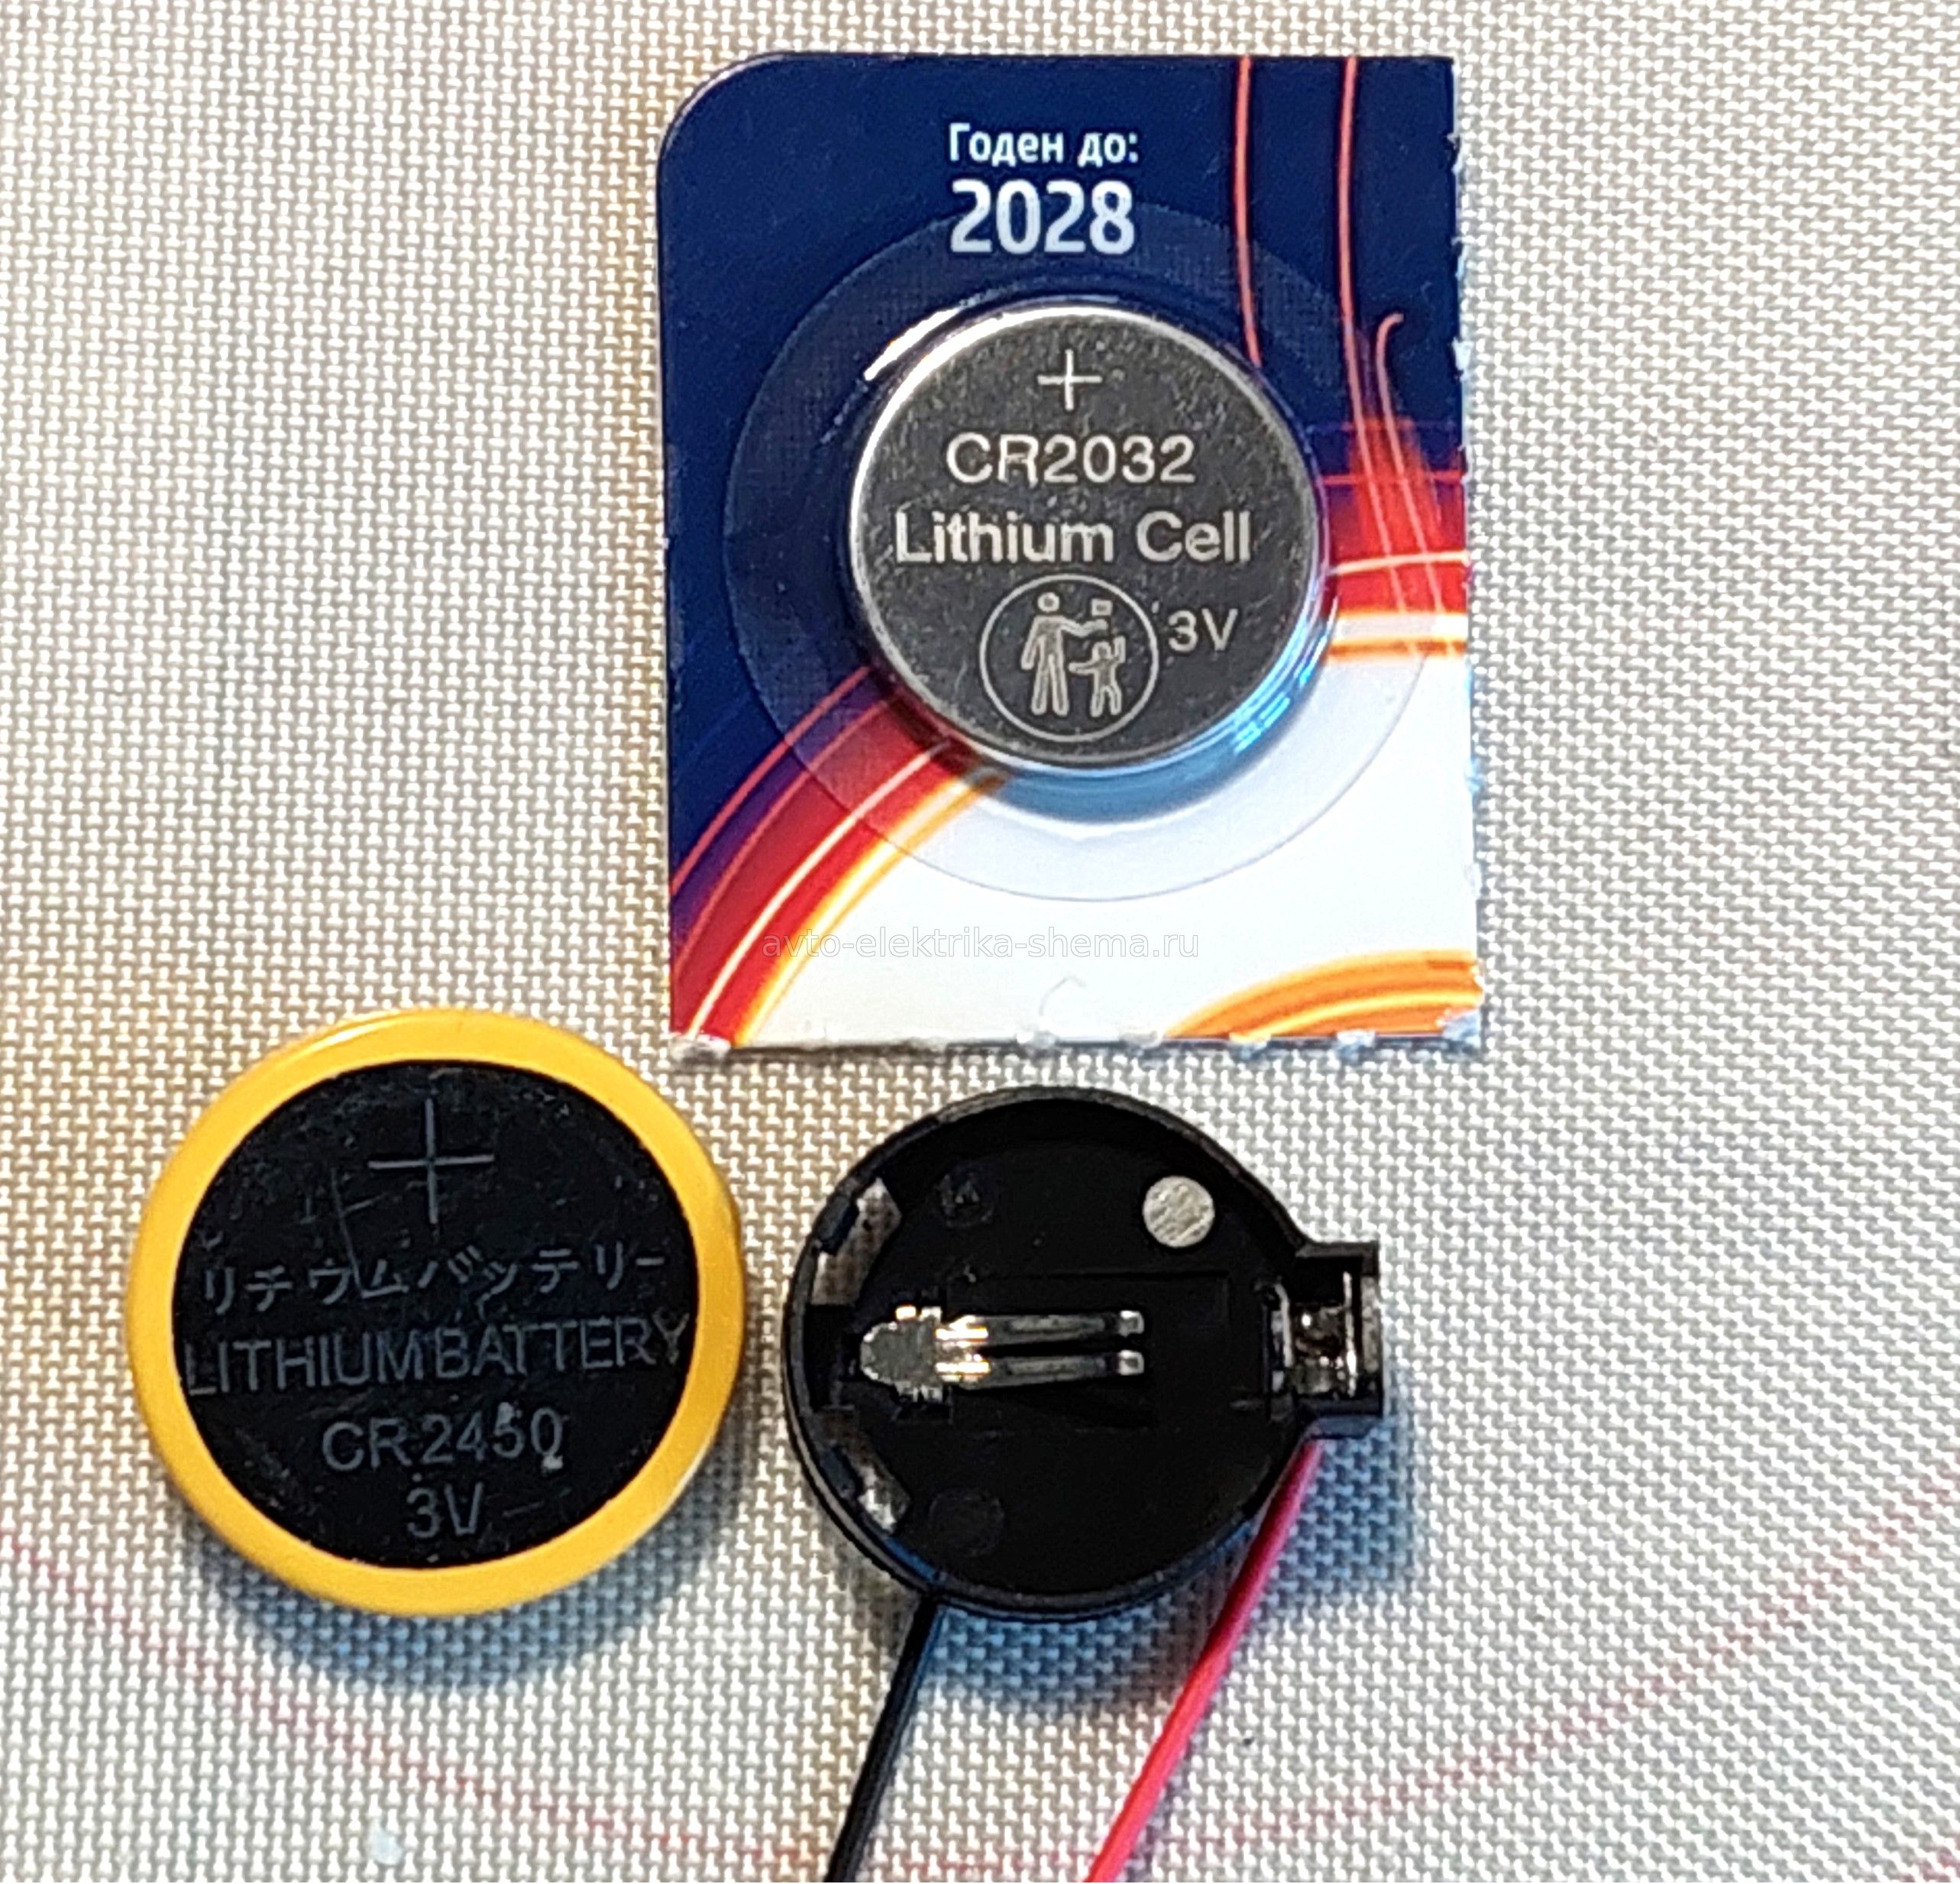 Сравнение батареек CR2450 и CR2032